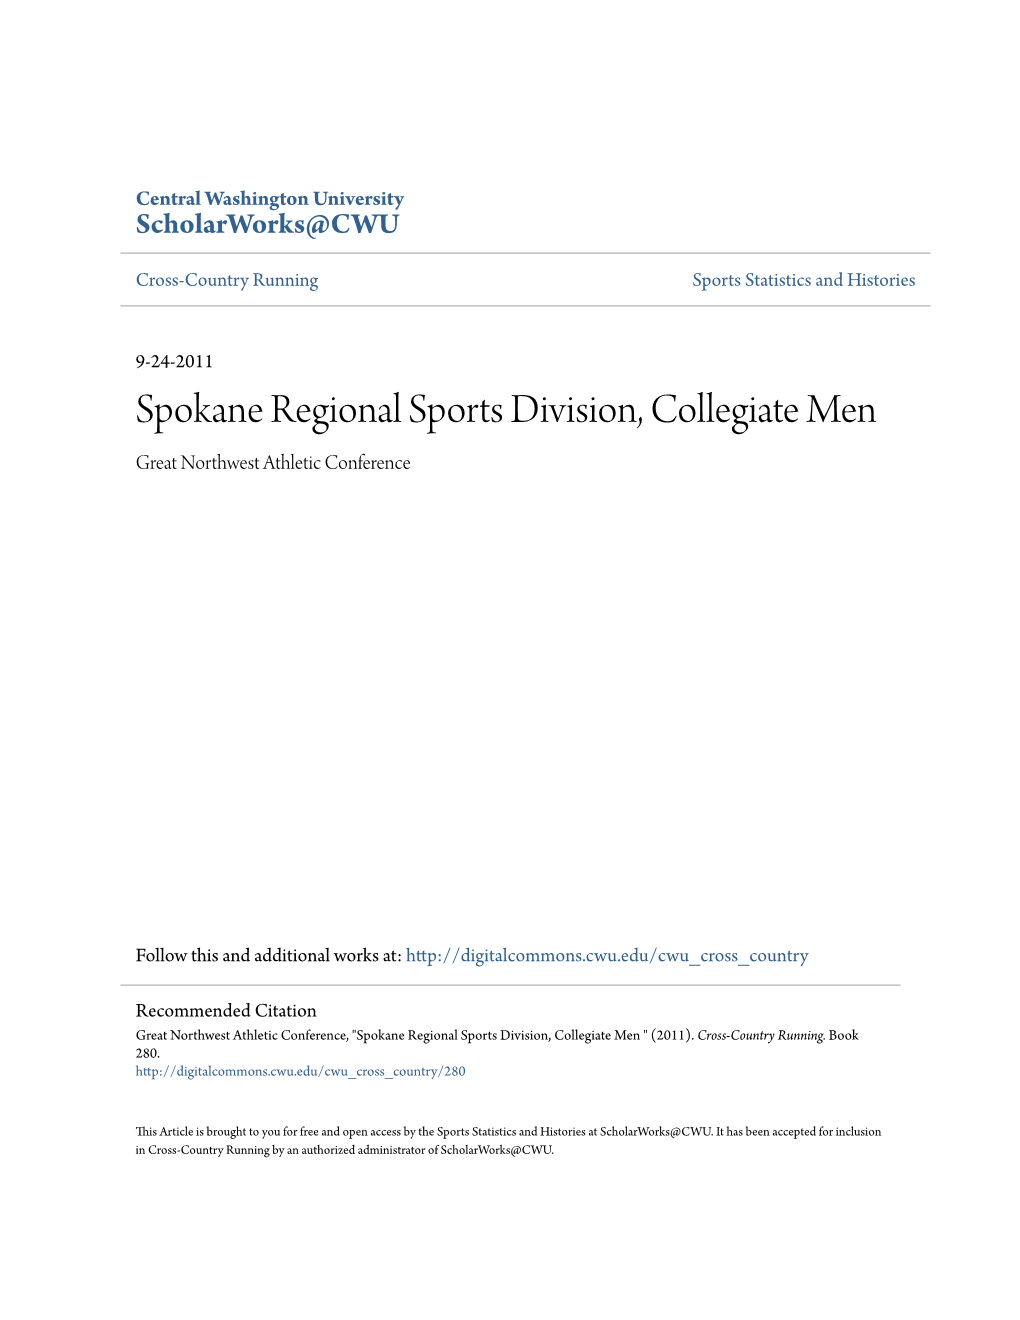 Spokane Regional Sports Division, Collegiate Men Great Northwest Athletic Conference